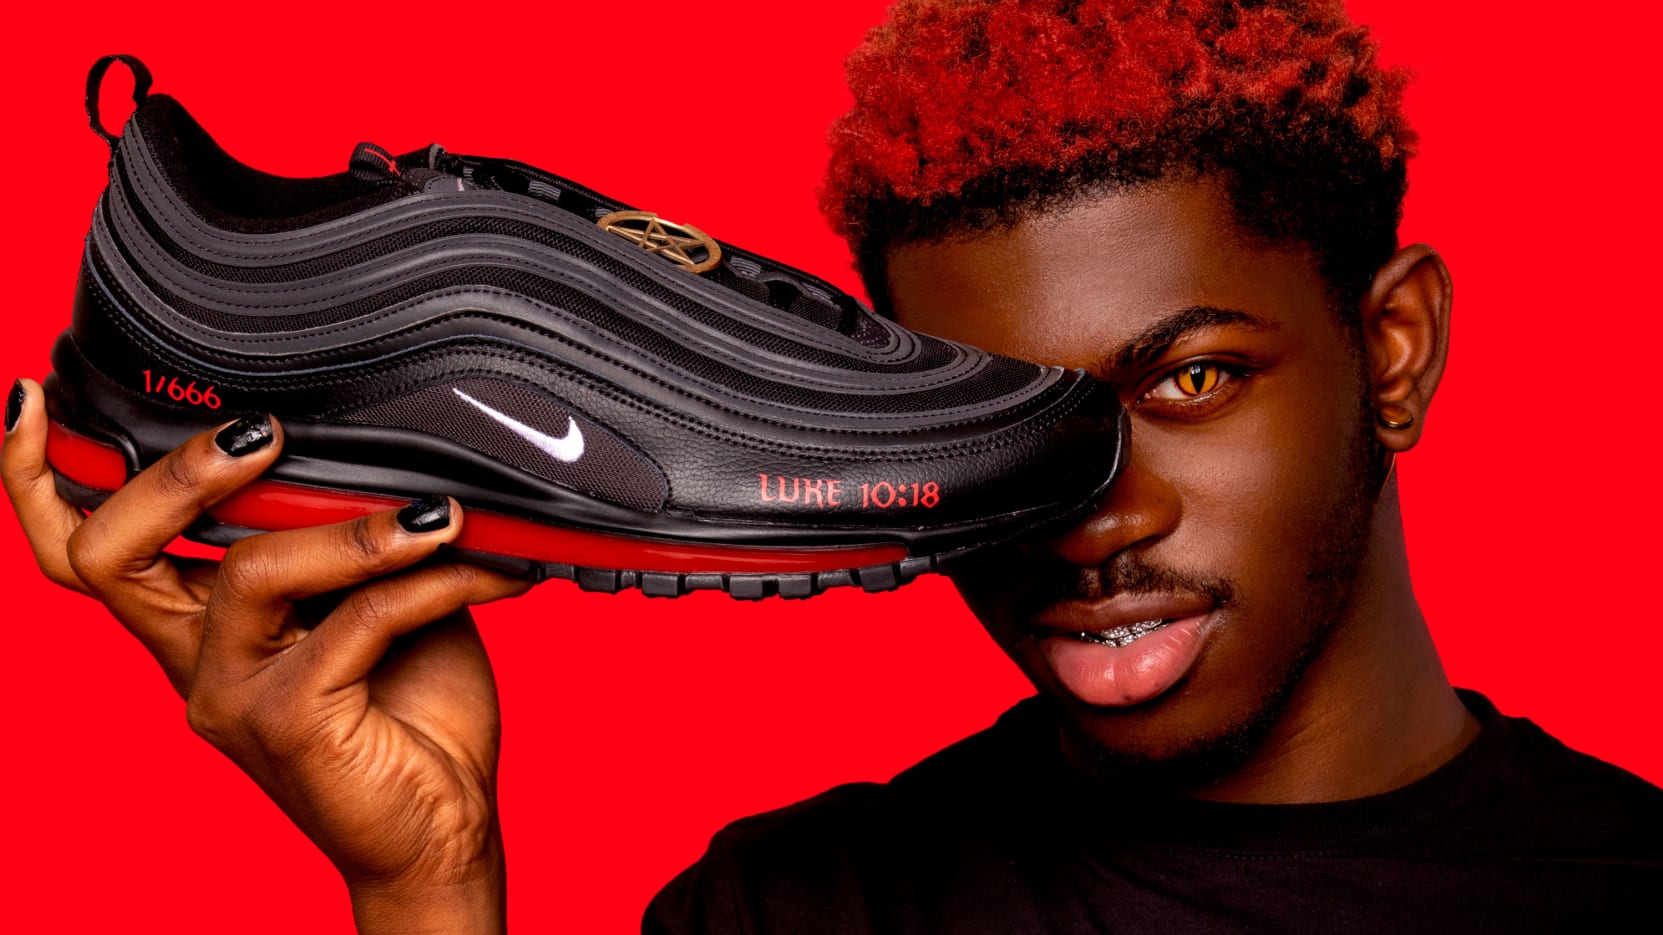 Guijarro Lágrimas extraer Nike sues over 'Satan Shoes' with human blood - BBC News